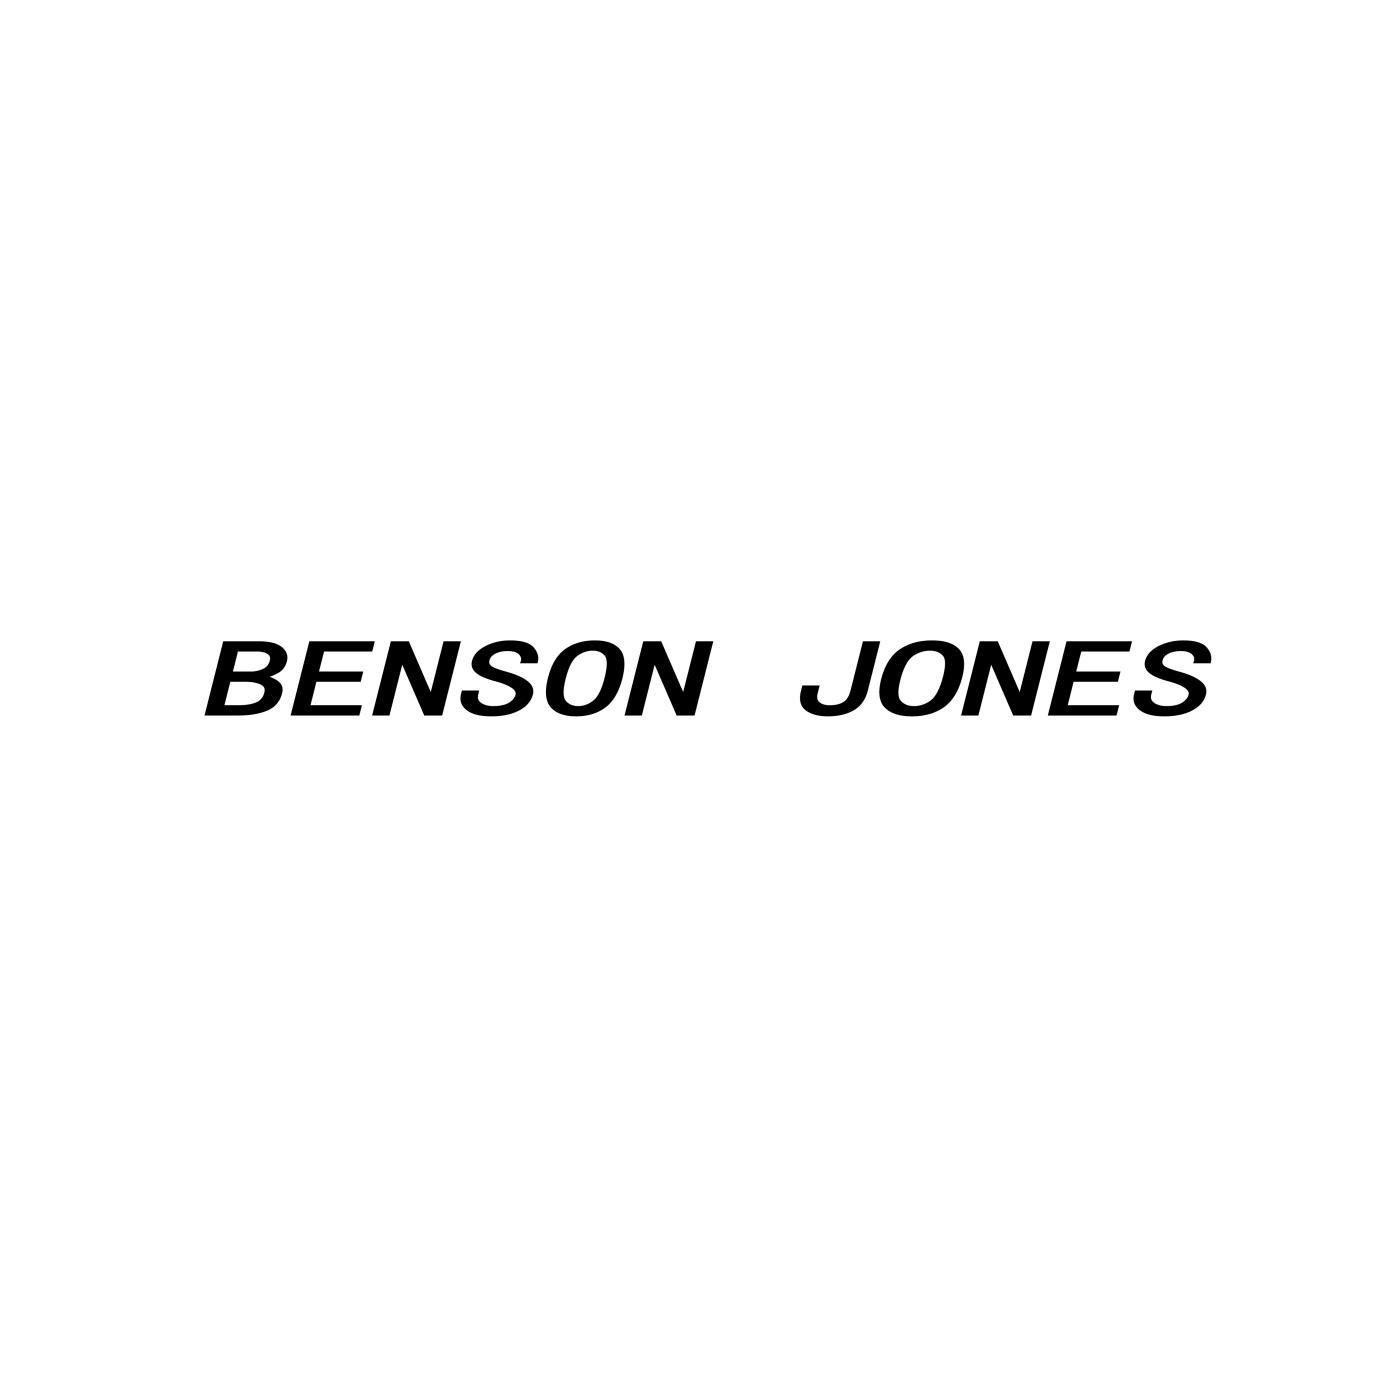 Benson Jones